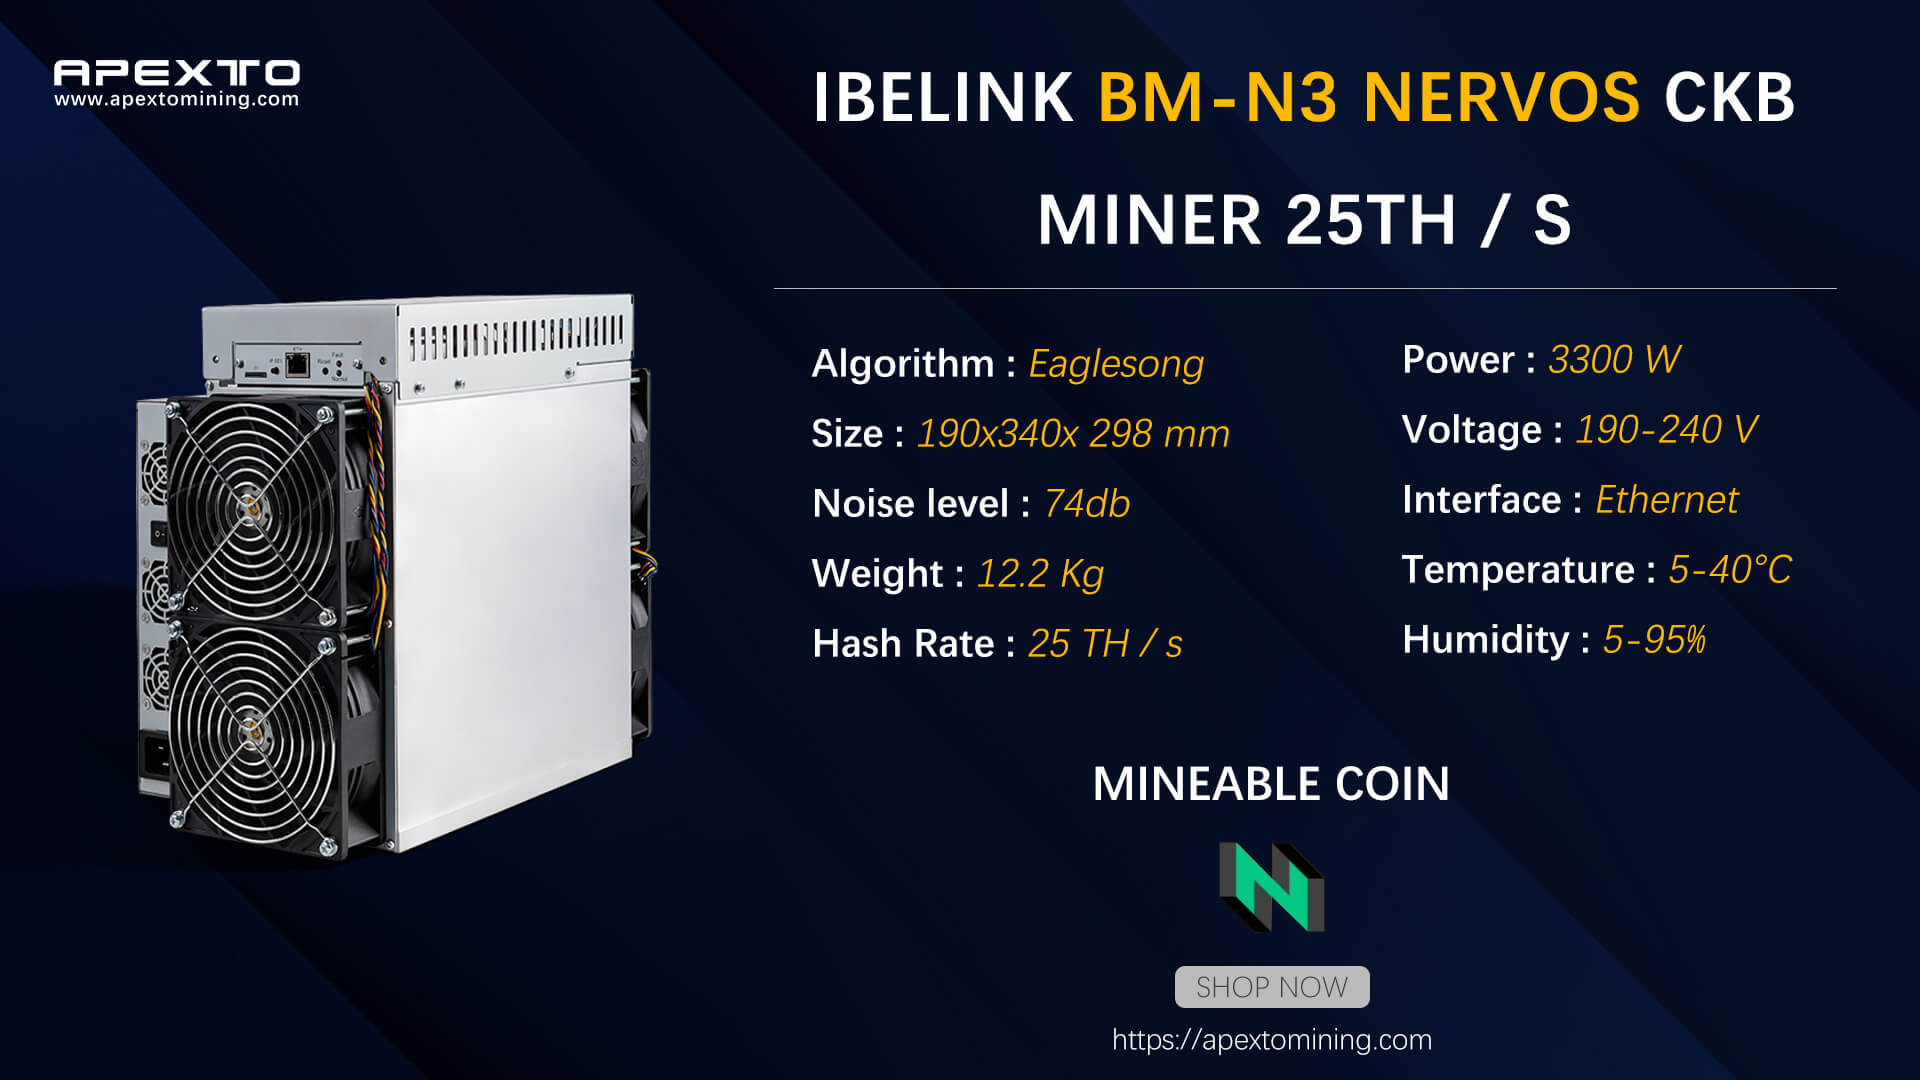 The New Arrival iBelink CKB Miner: BM -N3